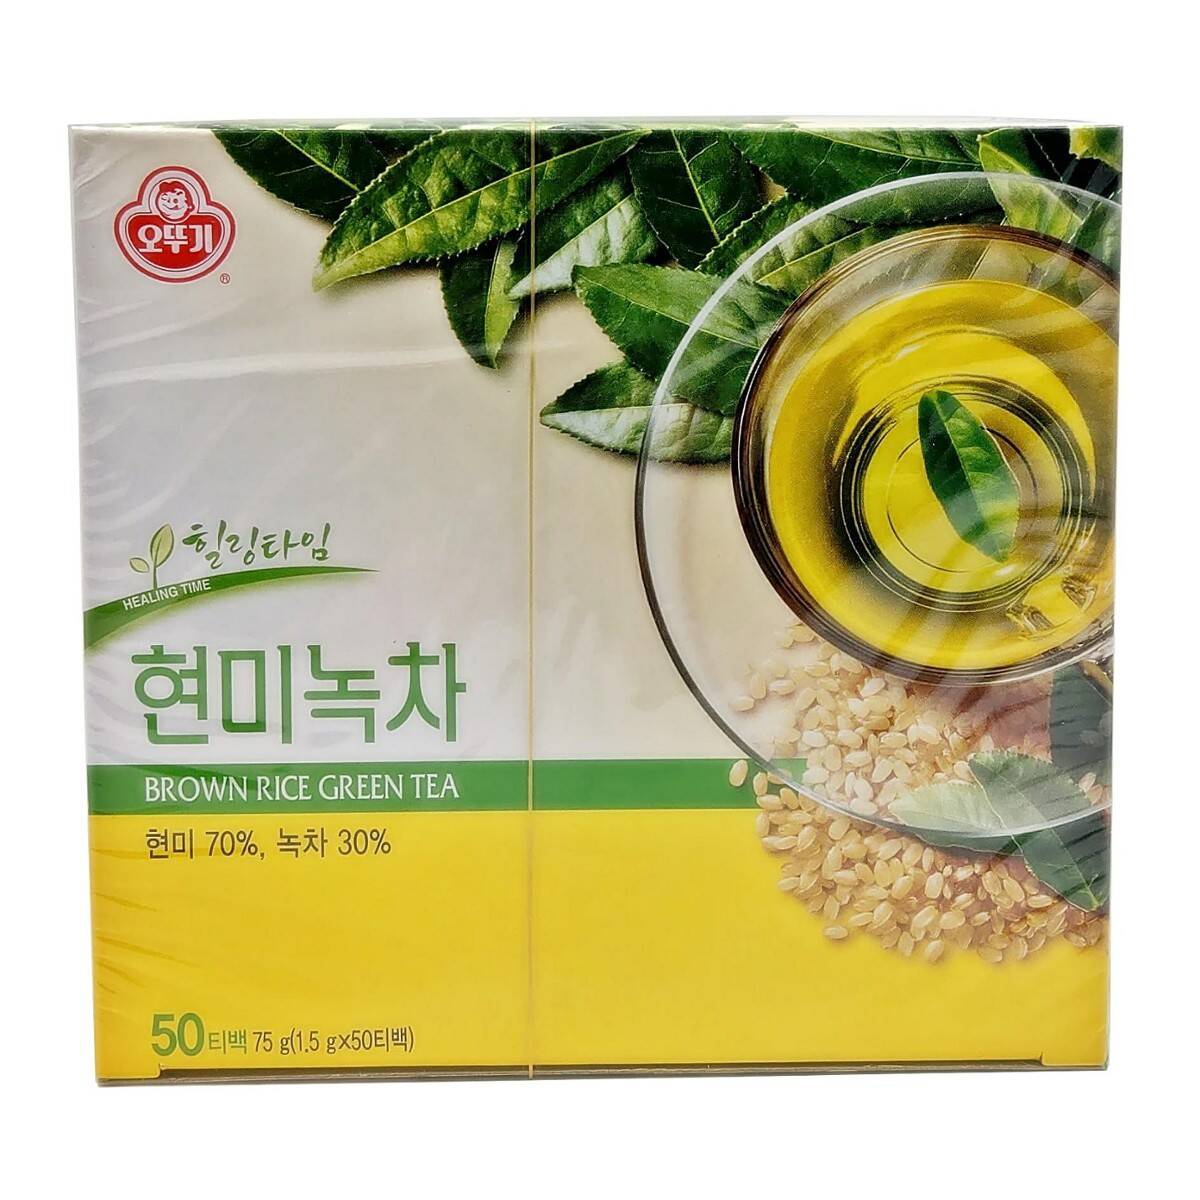 OTG Herbata zielona z ryżem torebki 75g